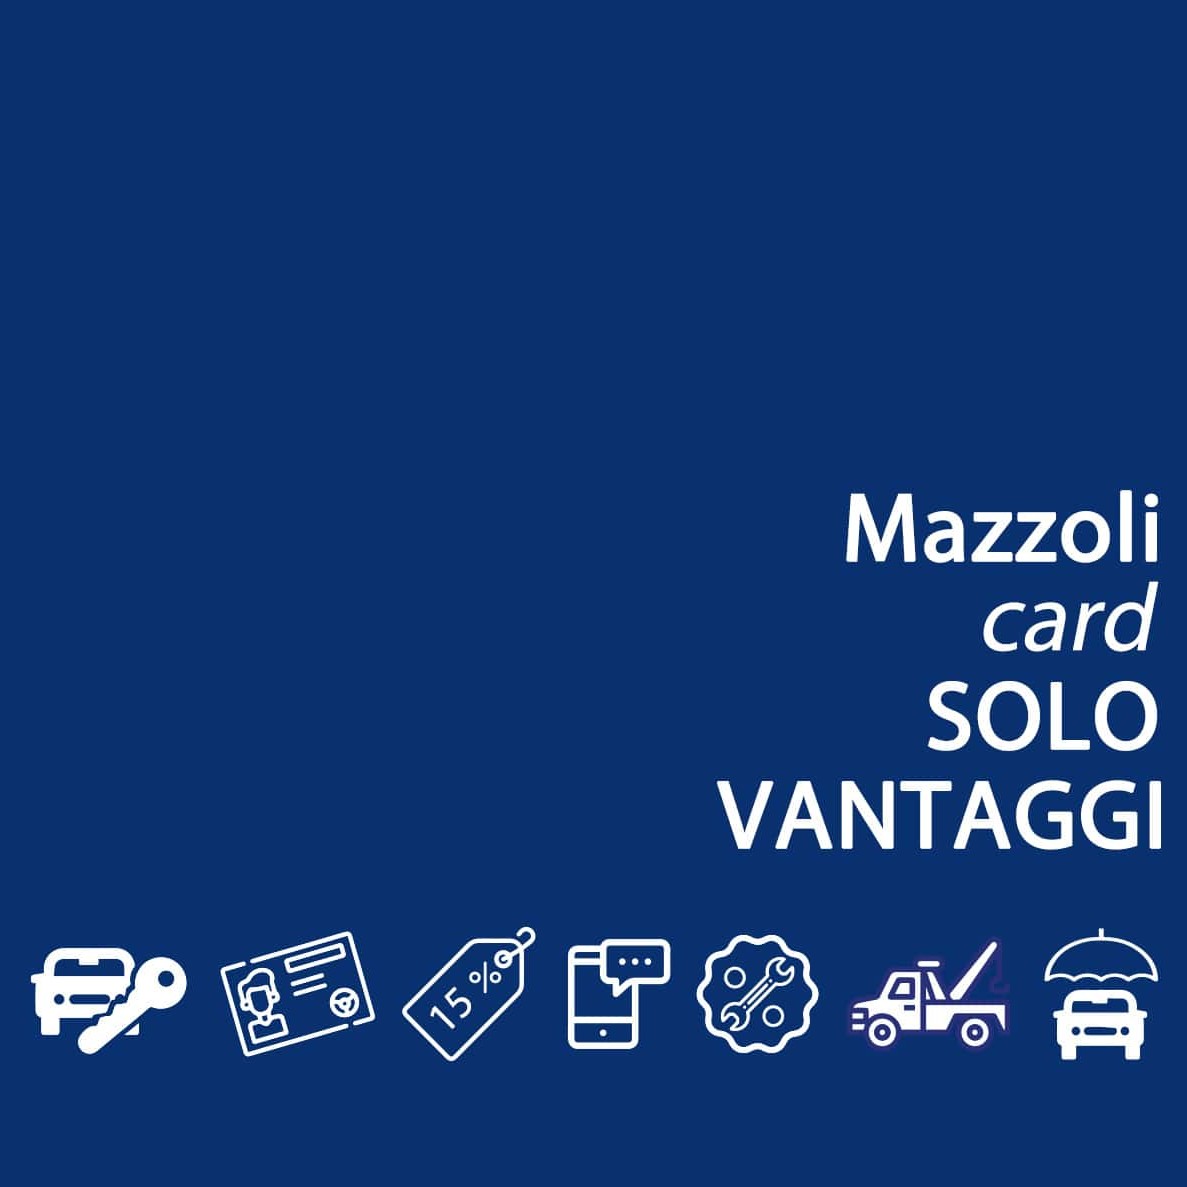 Mazzoli Card